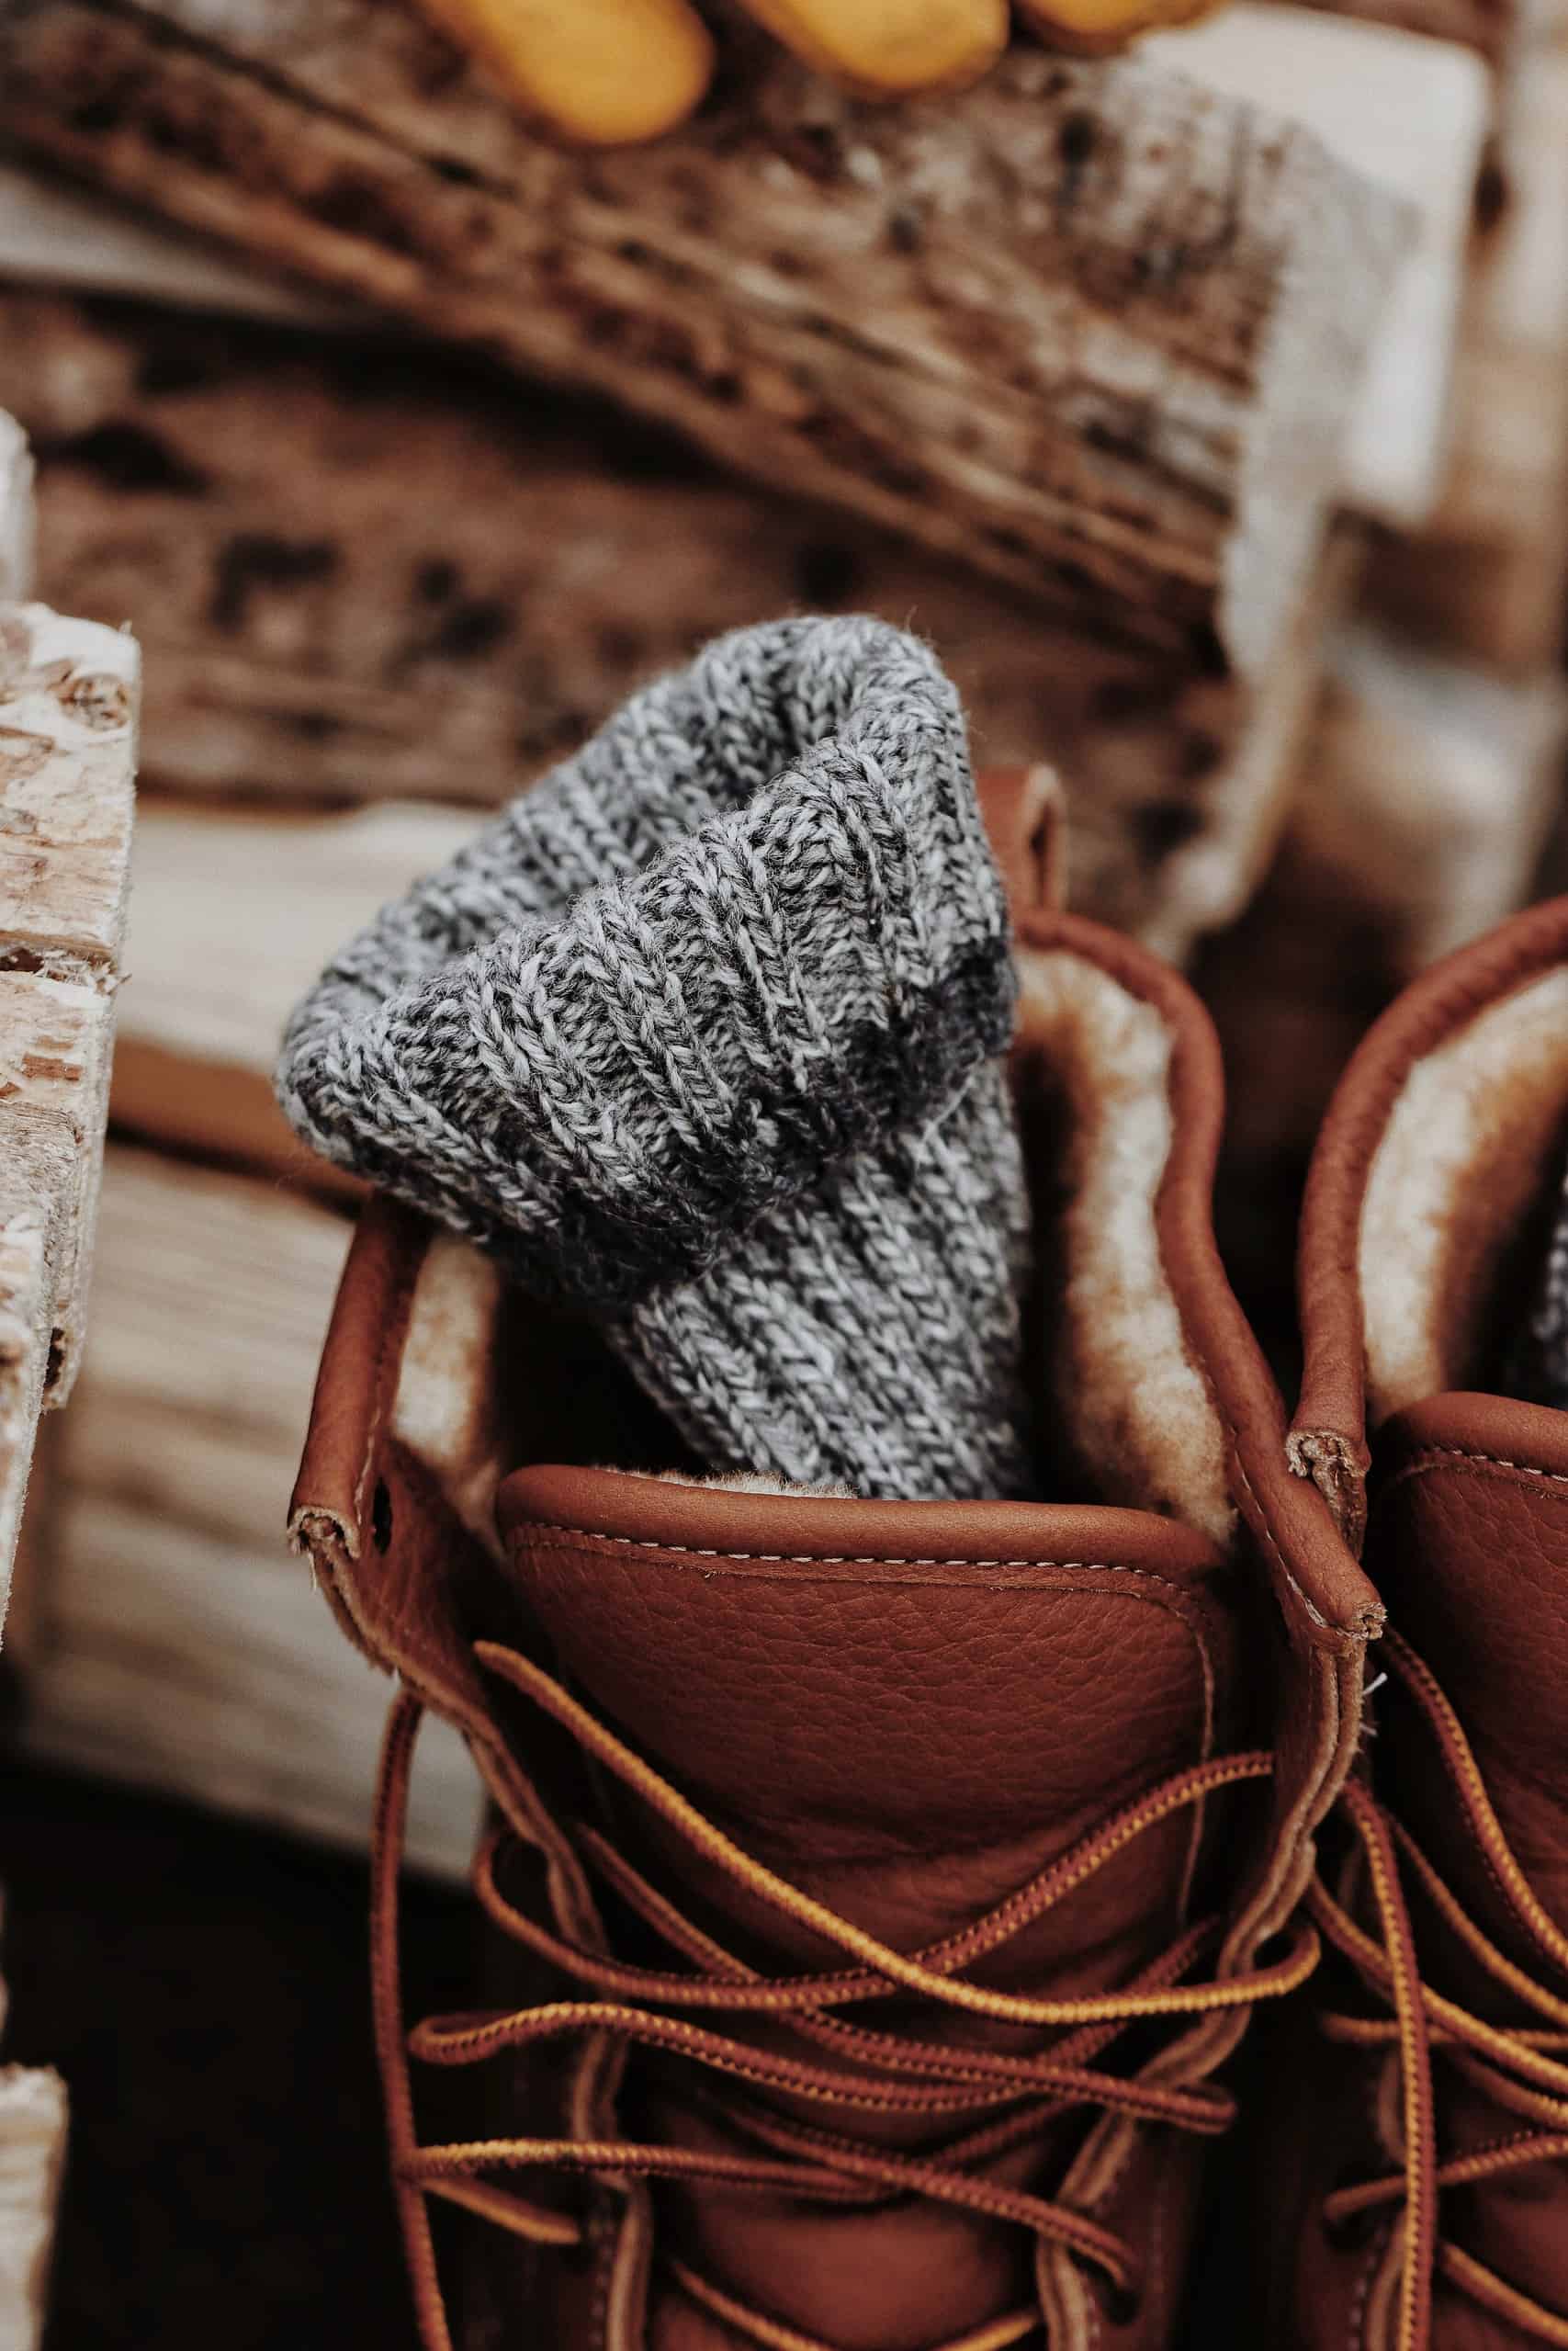 The Cozy Socks pattern by Darling Jadore